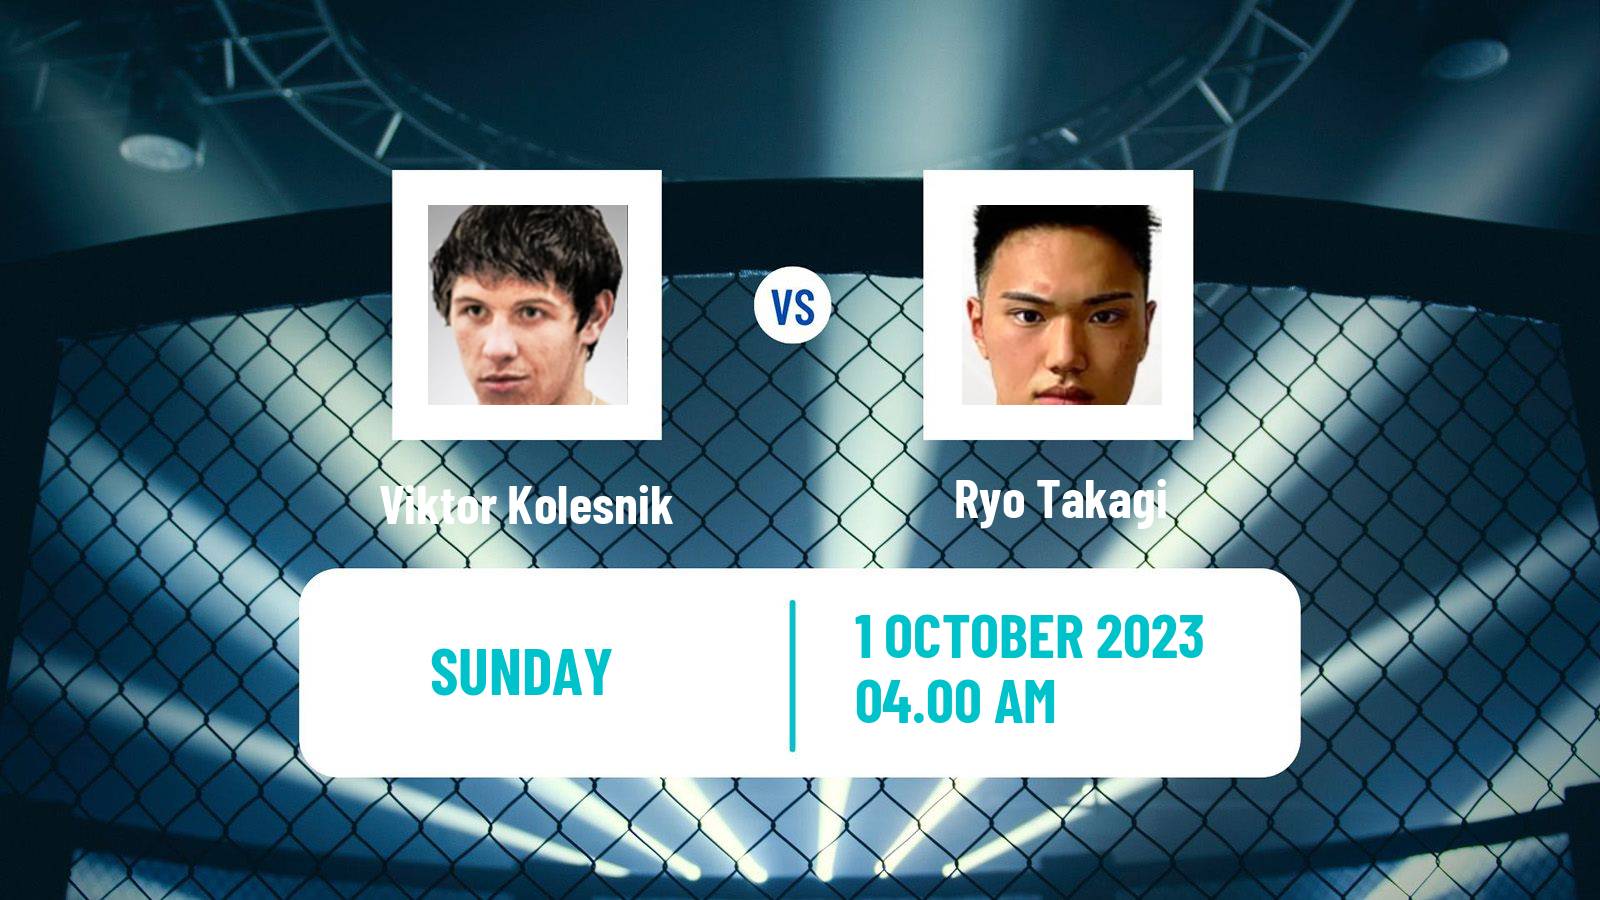 MMA Featherweight Rizin Men Viktor Kolesnik - Ryo Takagi